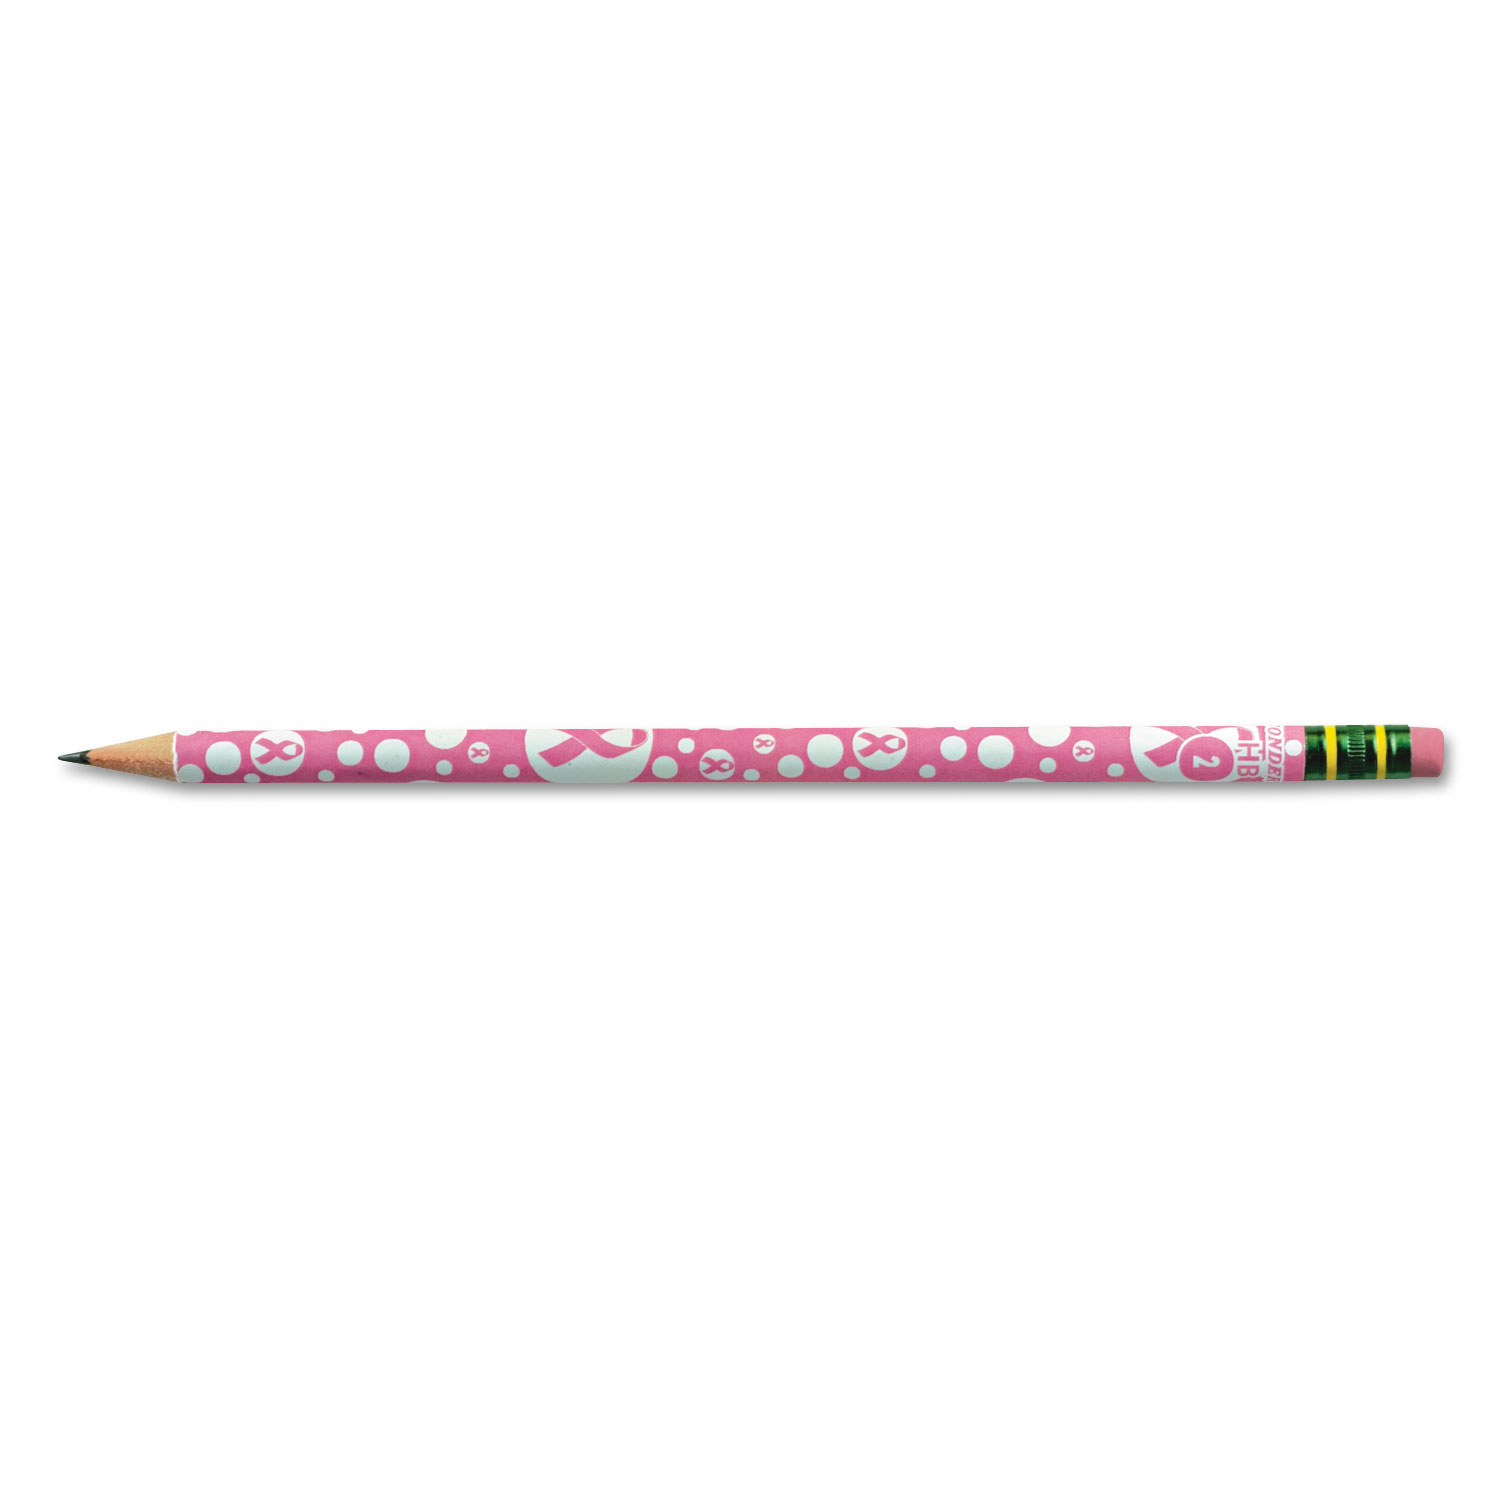  Ticonderoga 13960 Breast Cancer Awareness Woodcase Pencil, HB (#2), Black Lead, Pink Barrel, Dozen (DIX13960) 